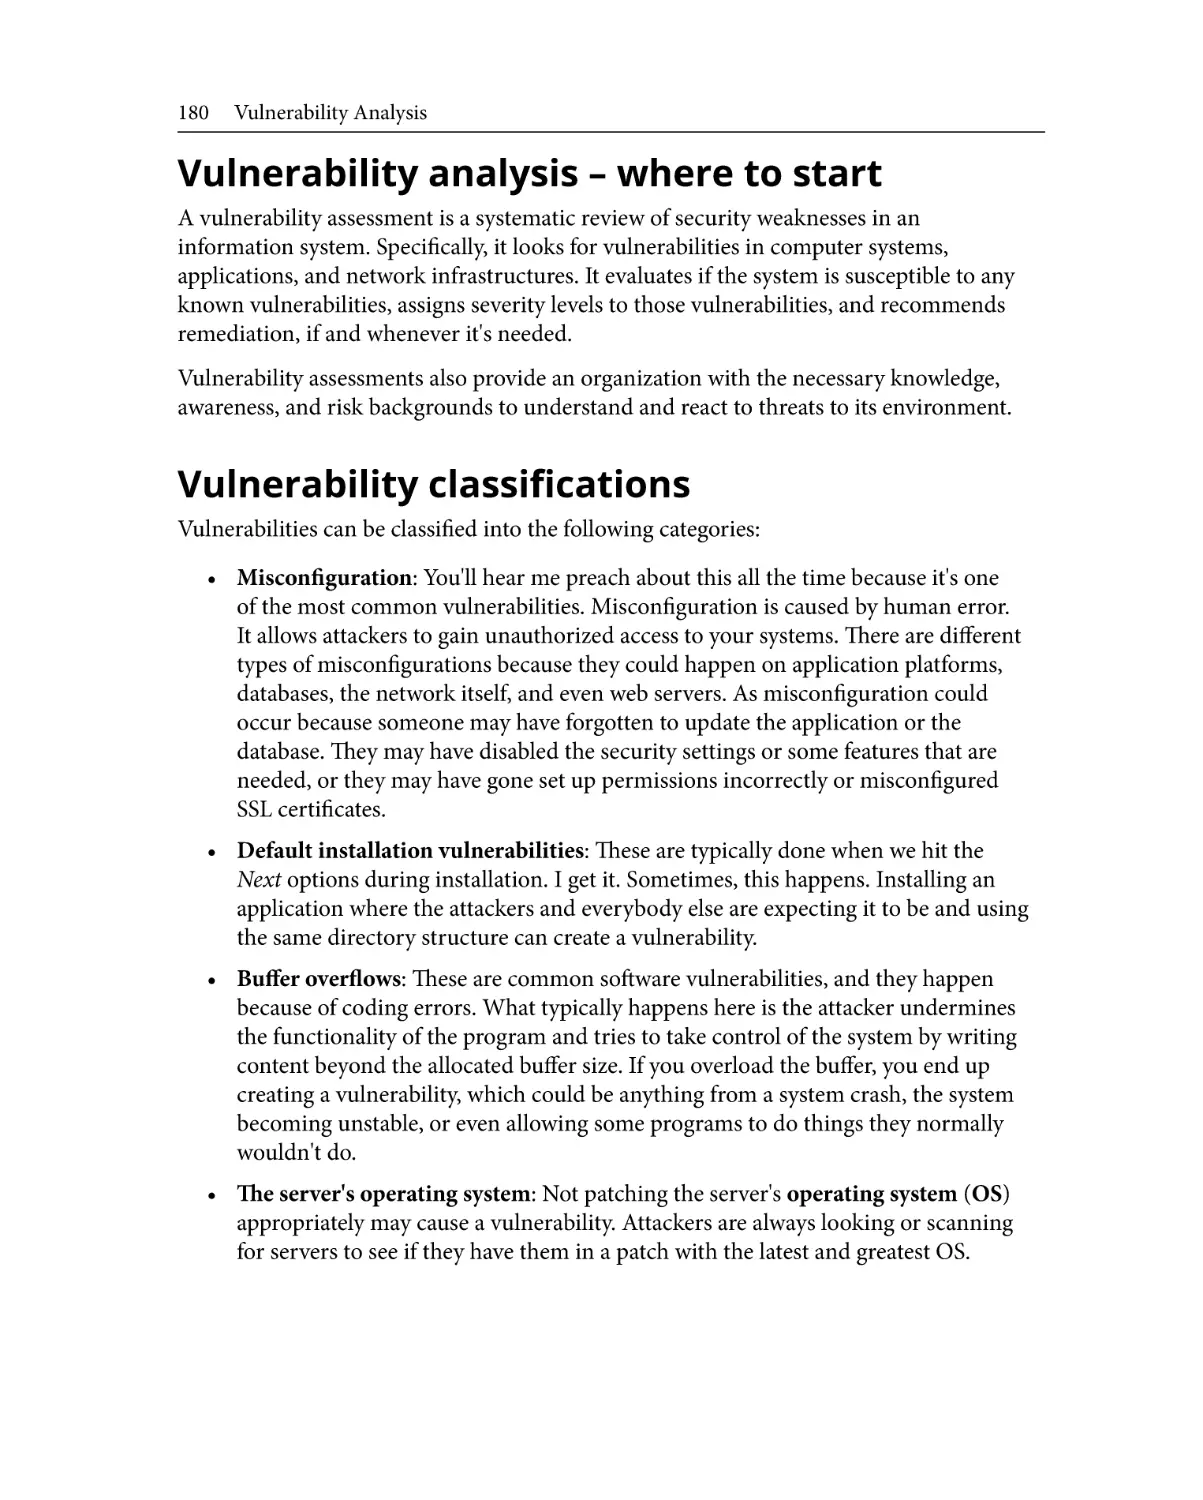 Vulnerability analysis – where to start
Vulnerability classifications